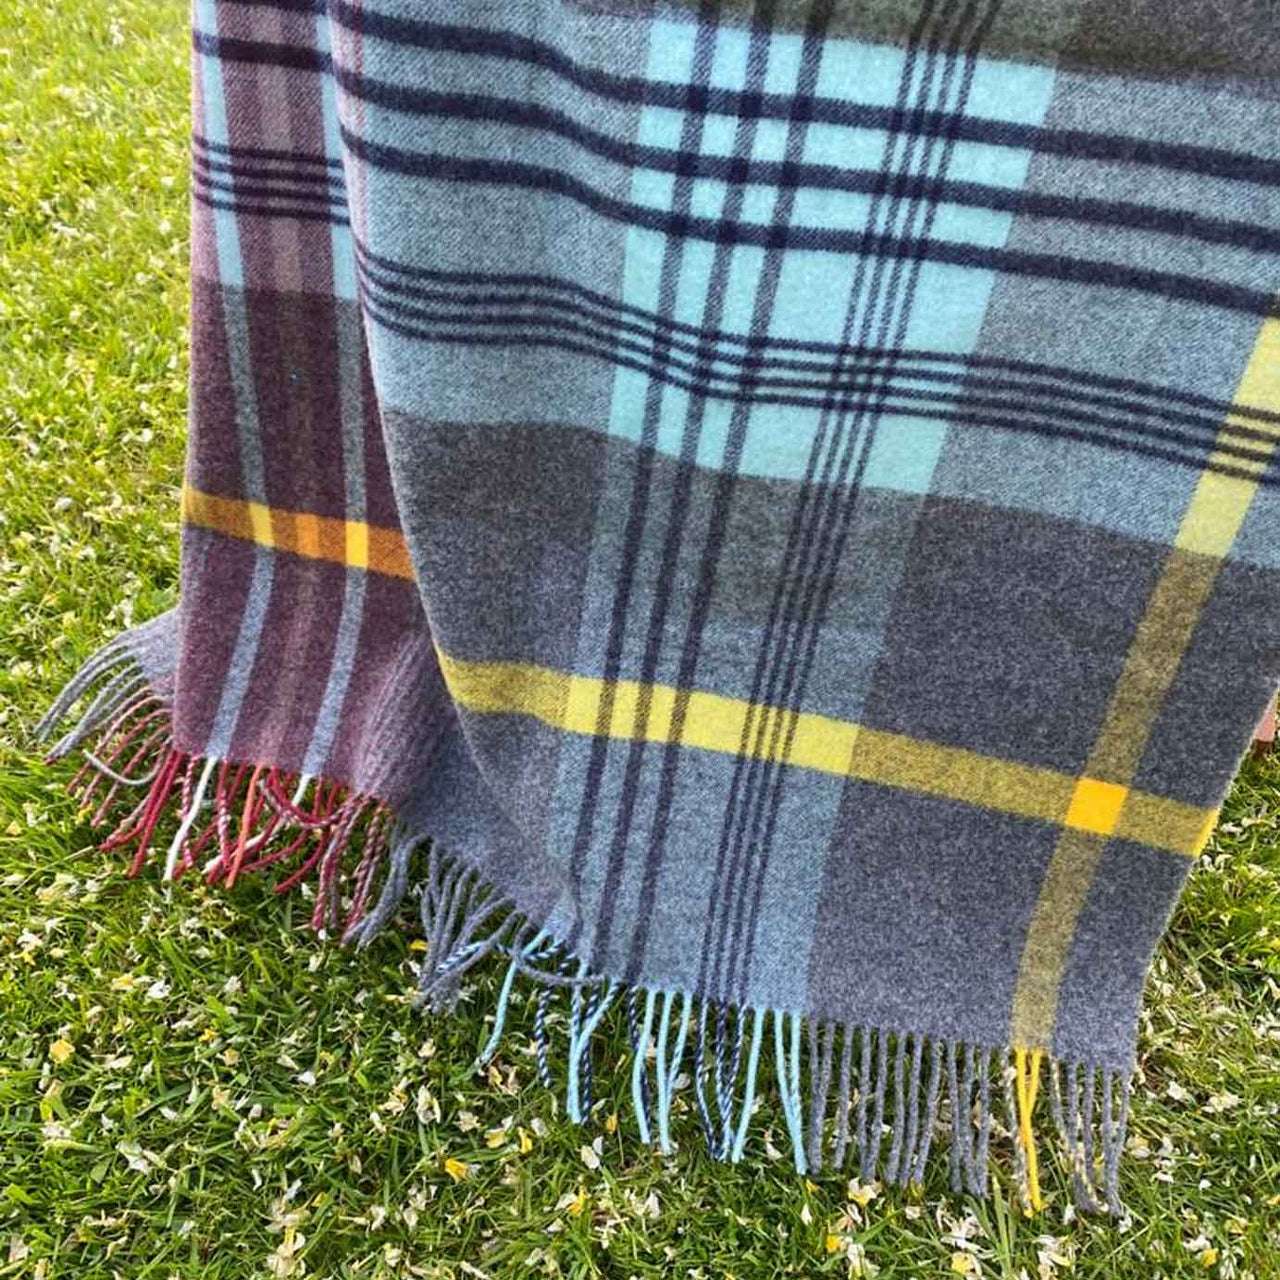 Brushed Wool Check Comfort Blanket - Made Scotland